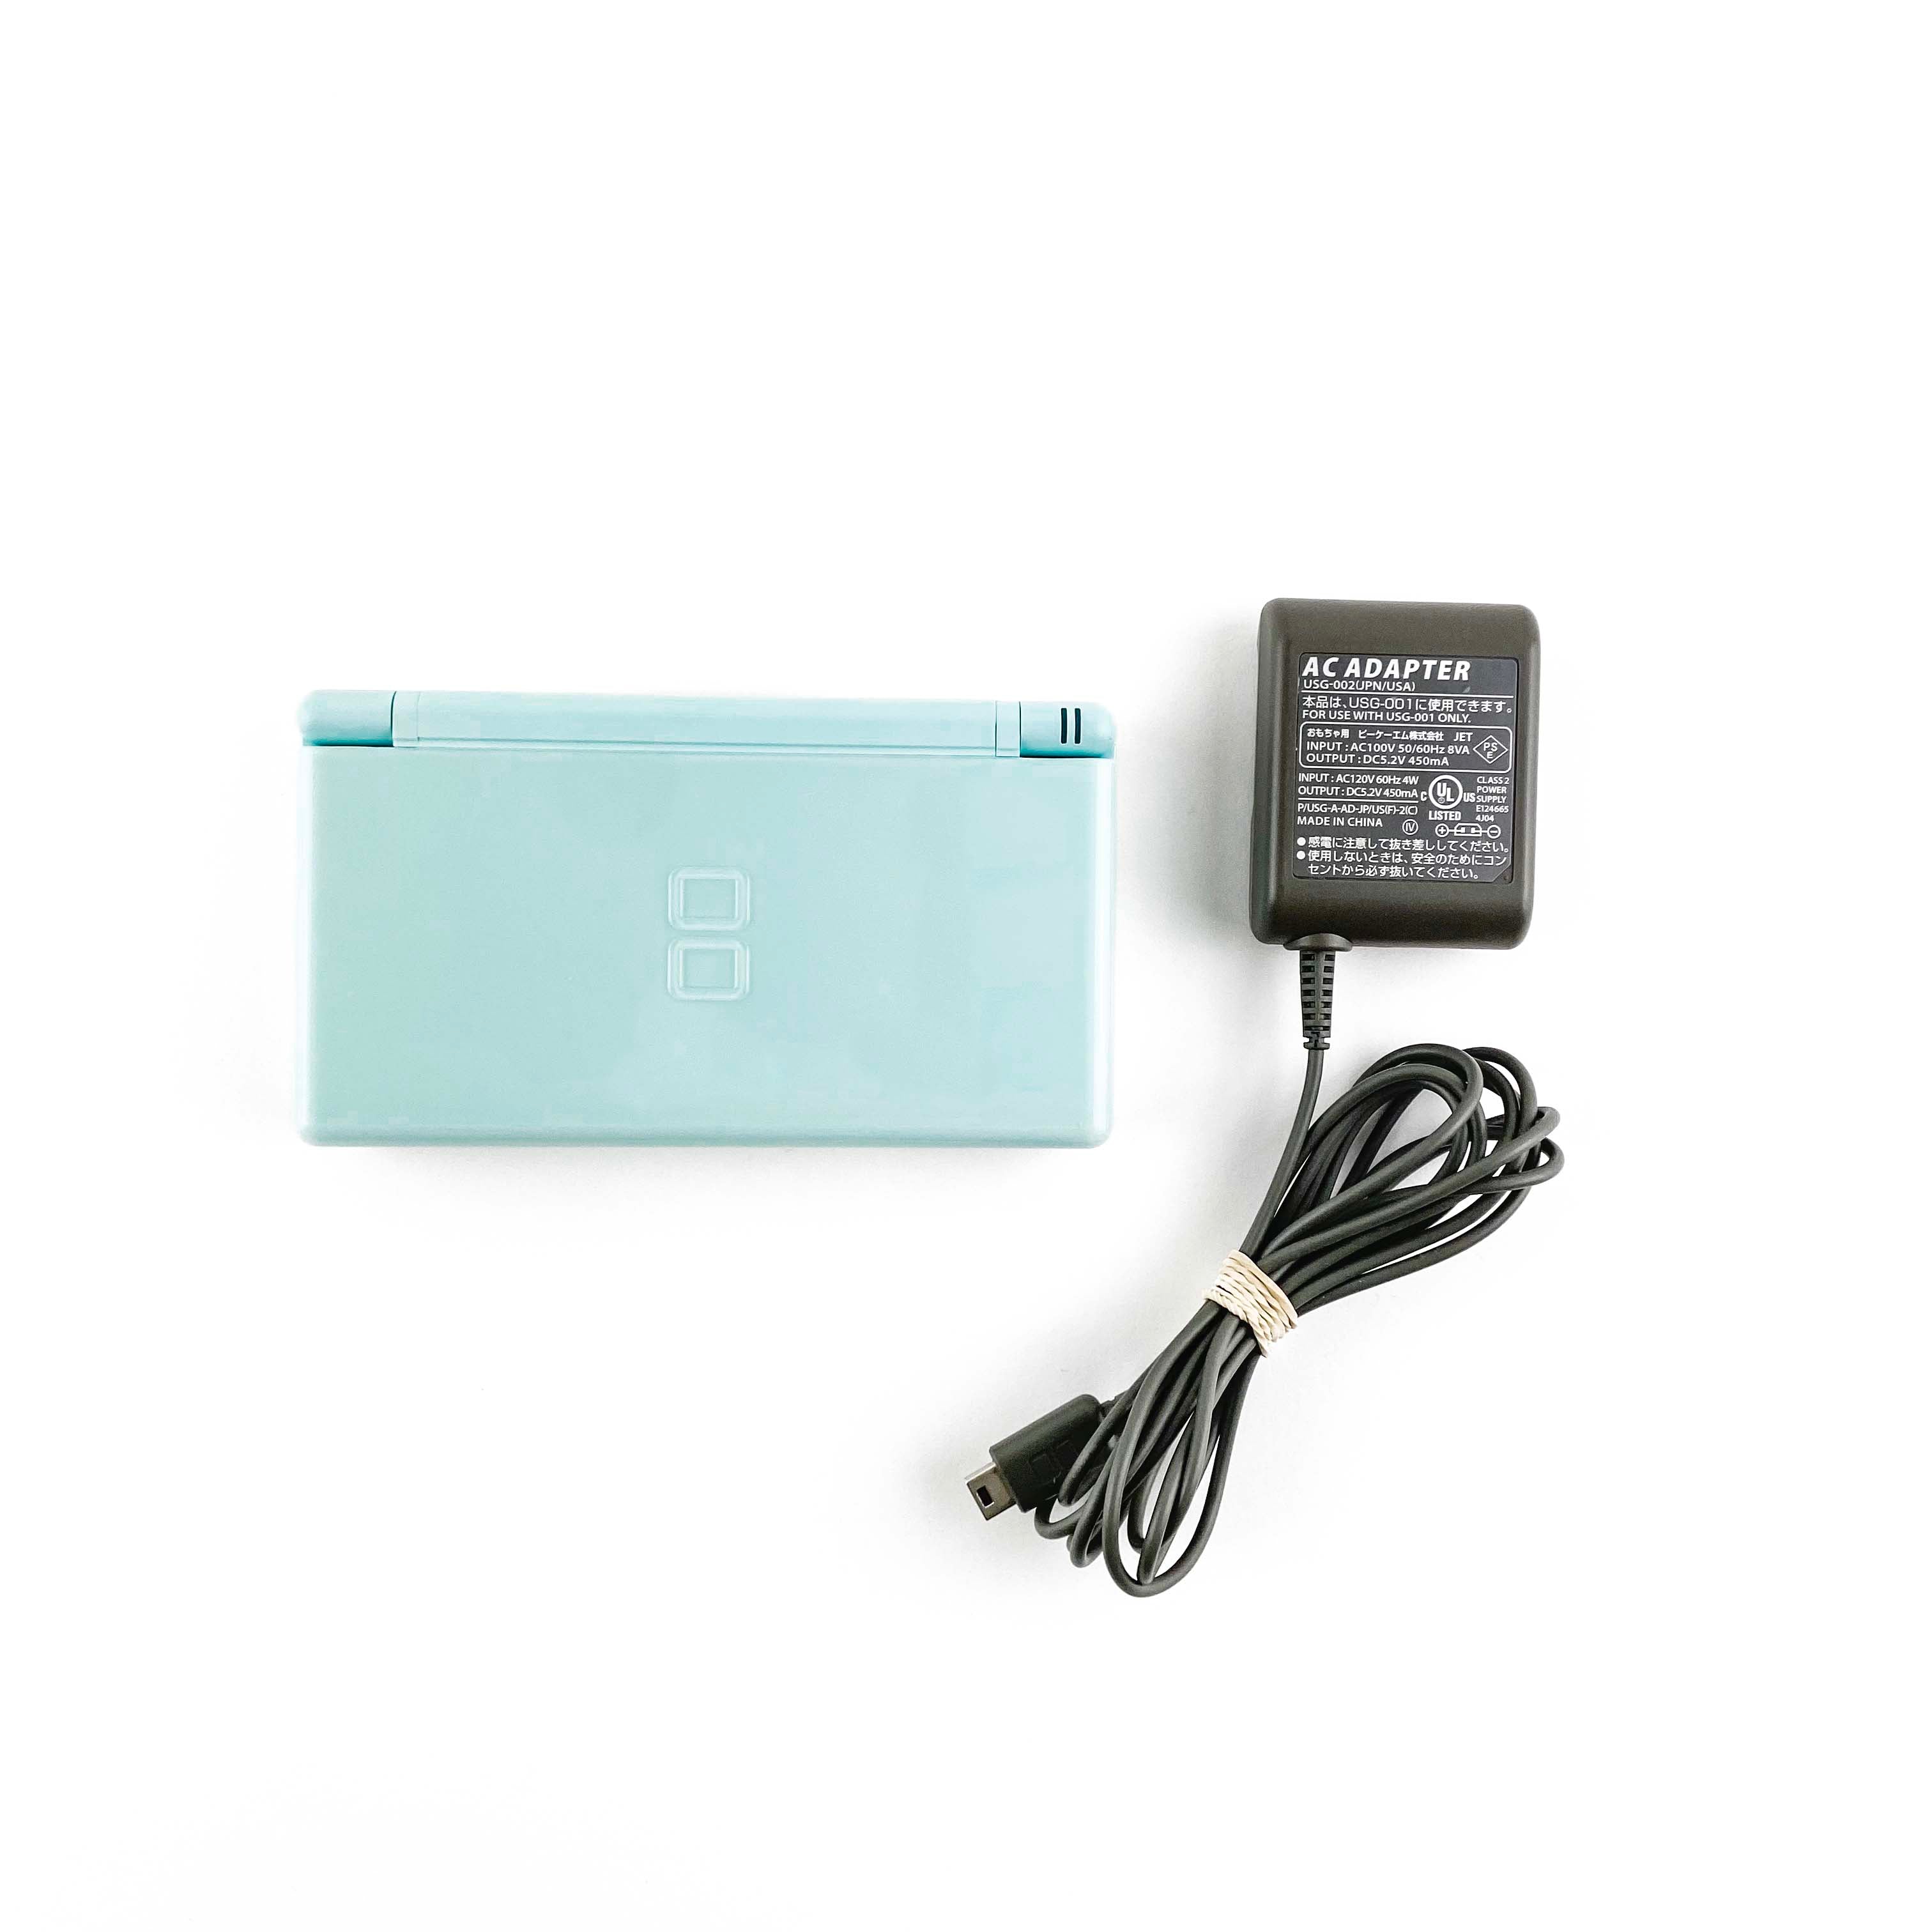 Nintendo DS Lite Ice Teal Blue Handheld Console (USG-001)